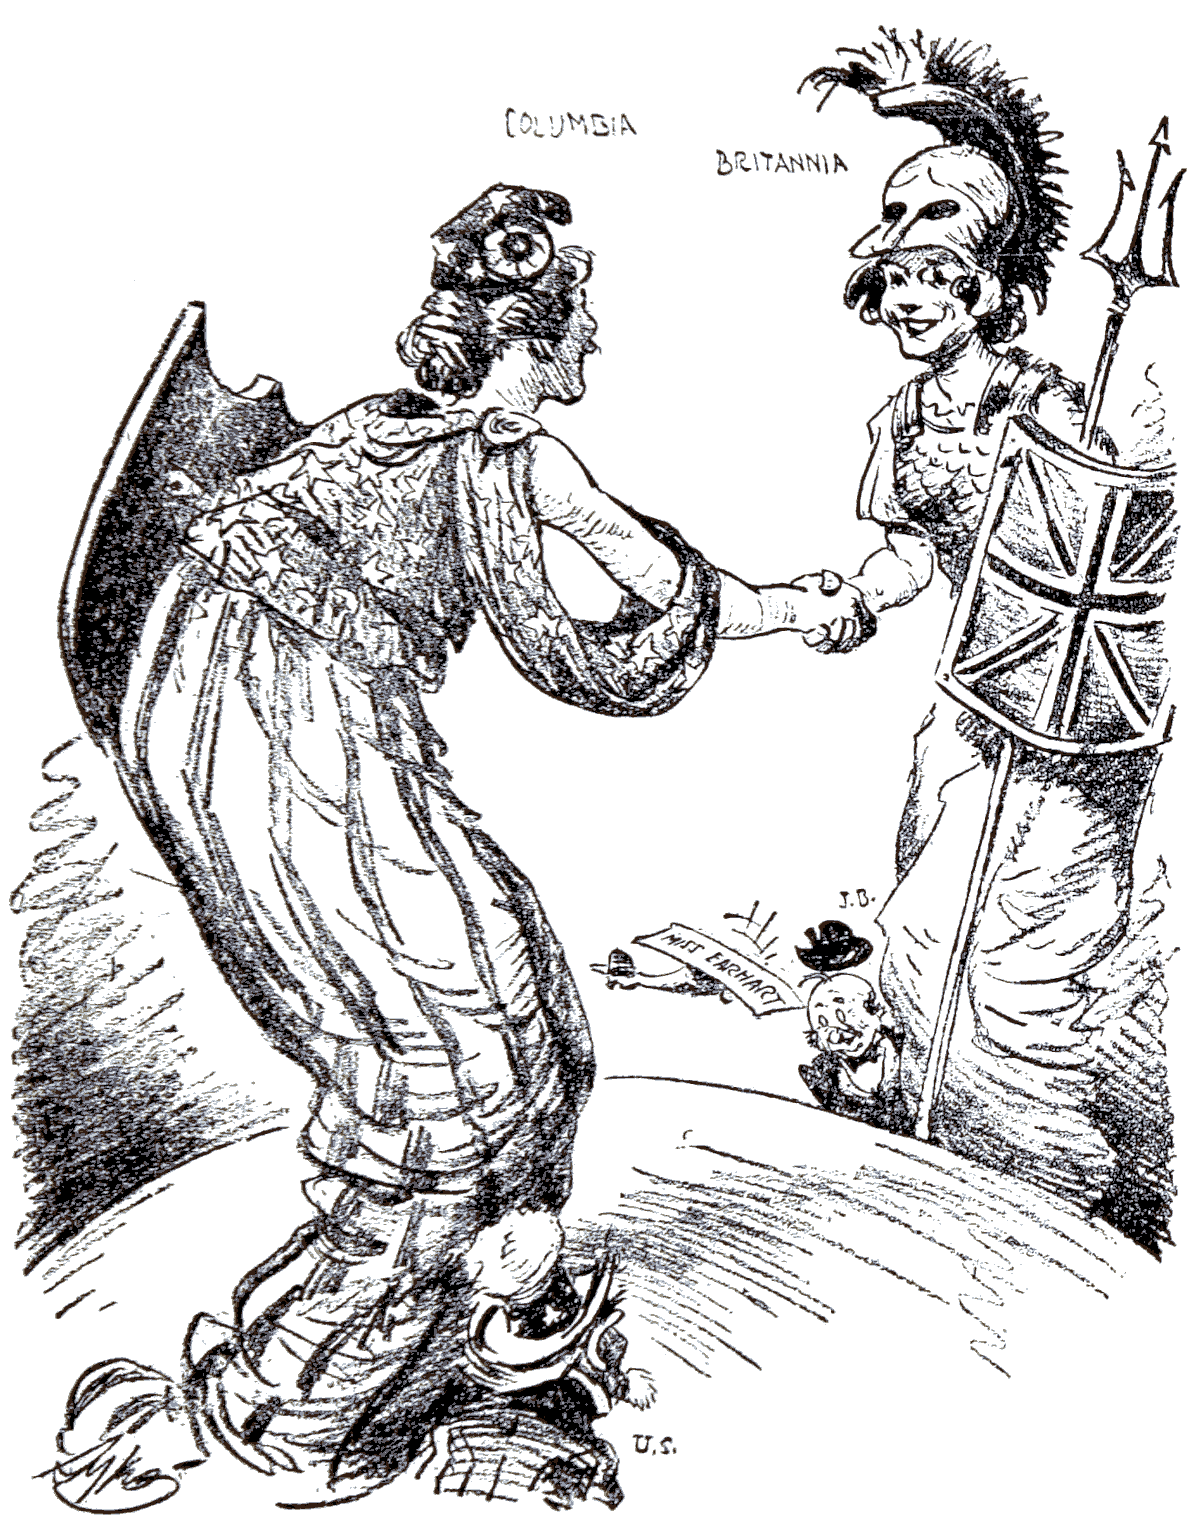 Drawing of giant Columbia and Britannia shaking hands across the Atlantic; Earhart plane flies below; U.S. (Uncle Sam and J.B. (John Bull) look on